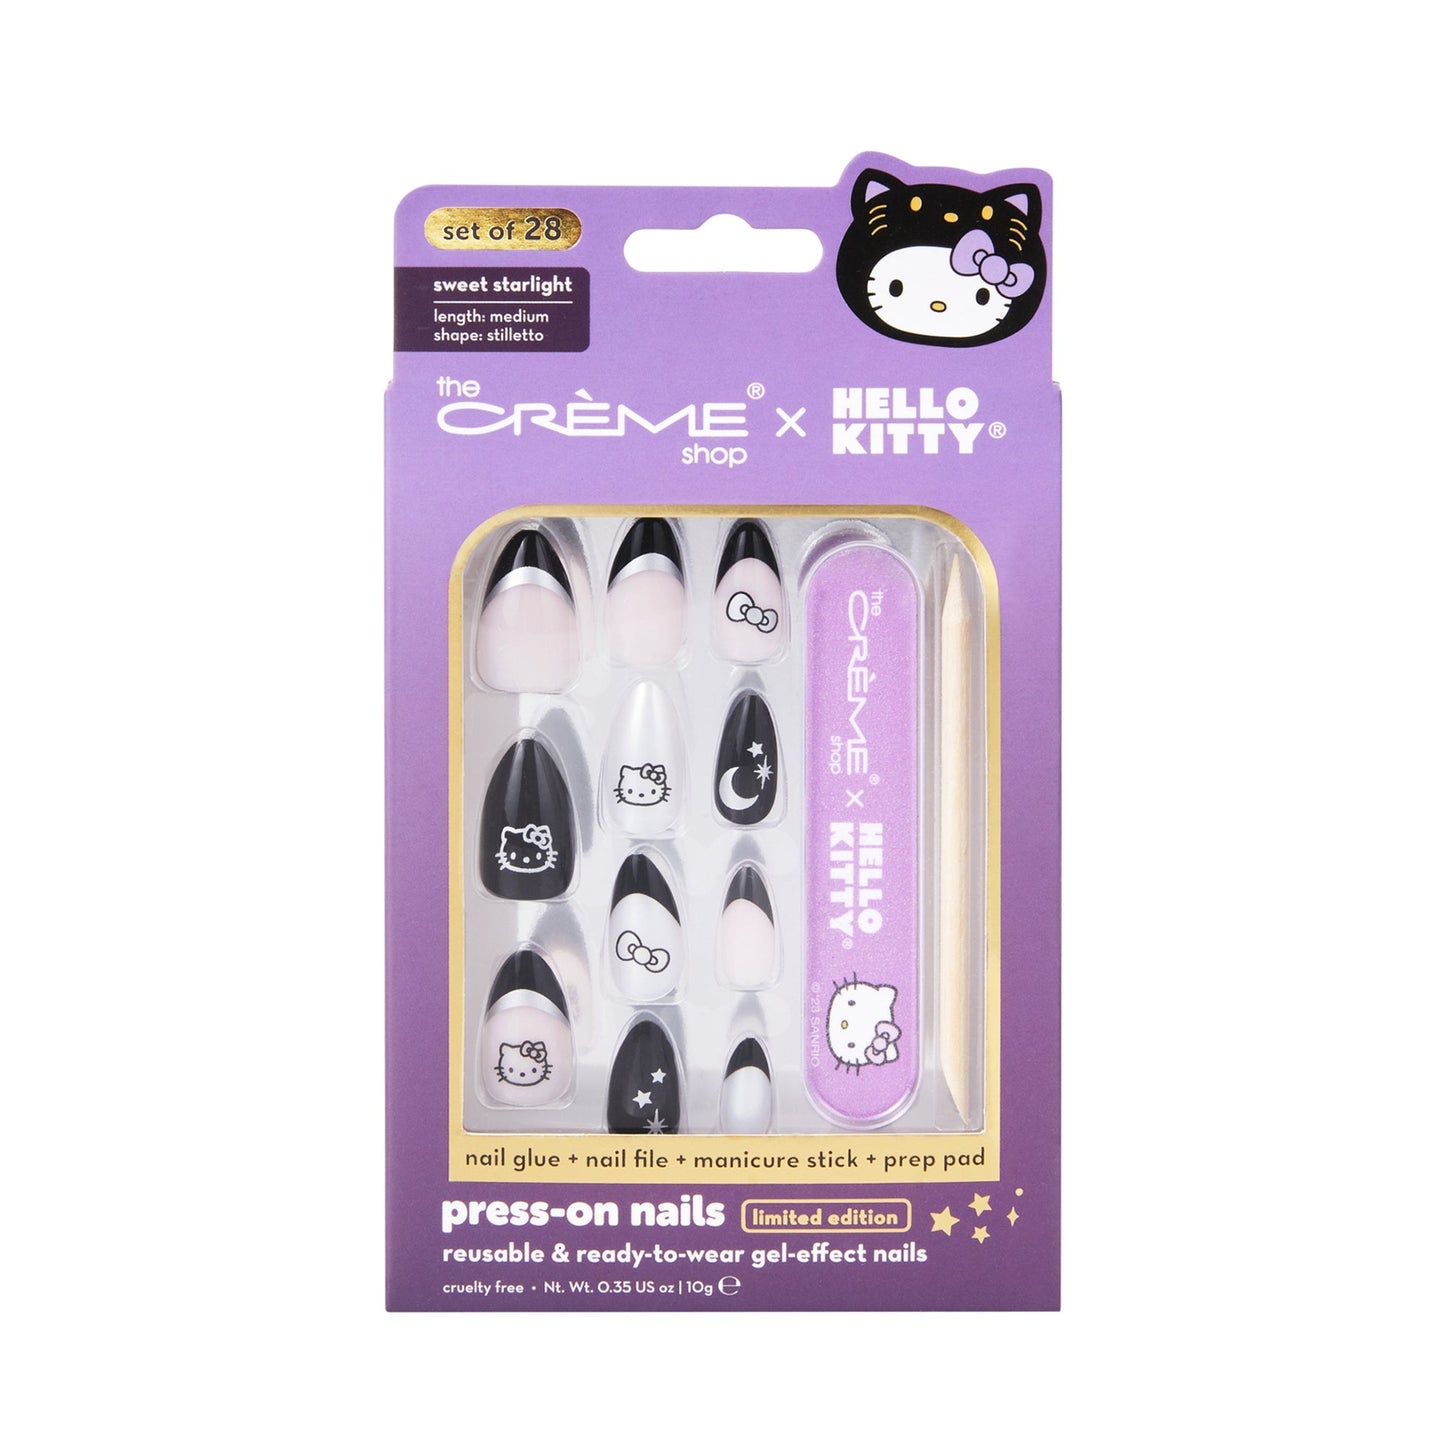 The Crème Shop x Hello Kitty: Sweet Starlight Press-On Nails Press On Nails The Crème Shop x Sanrio 